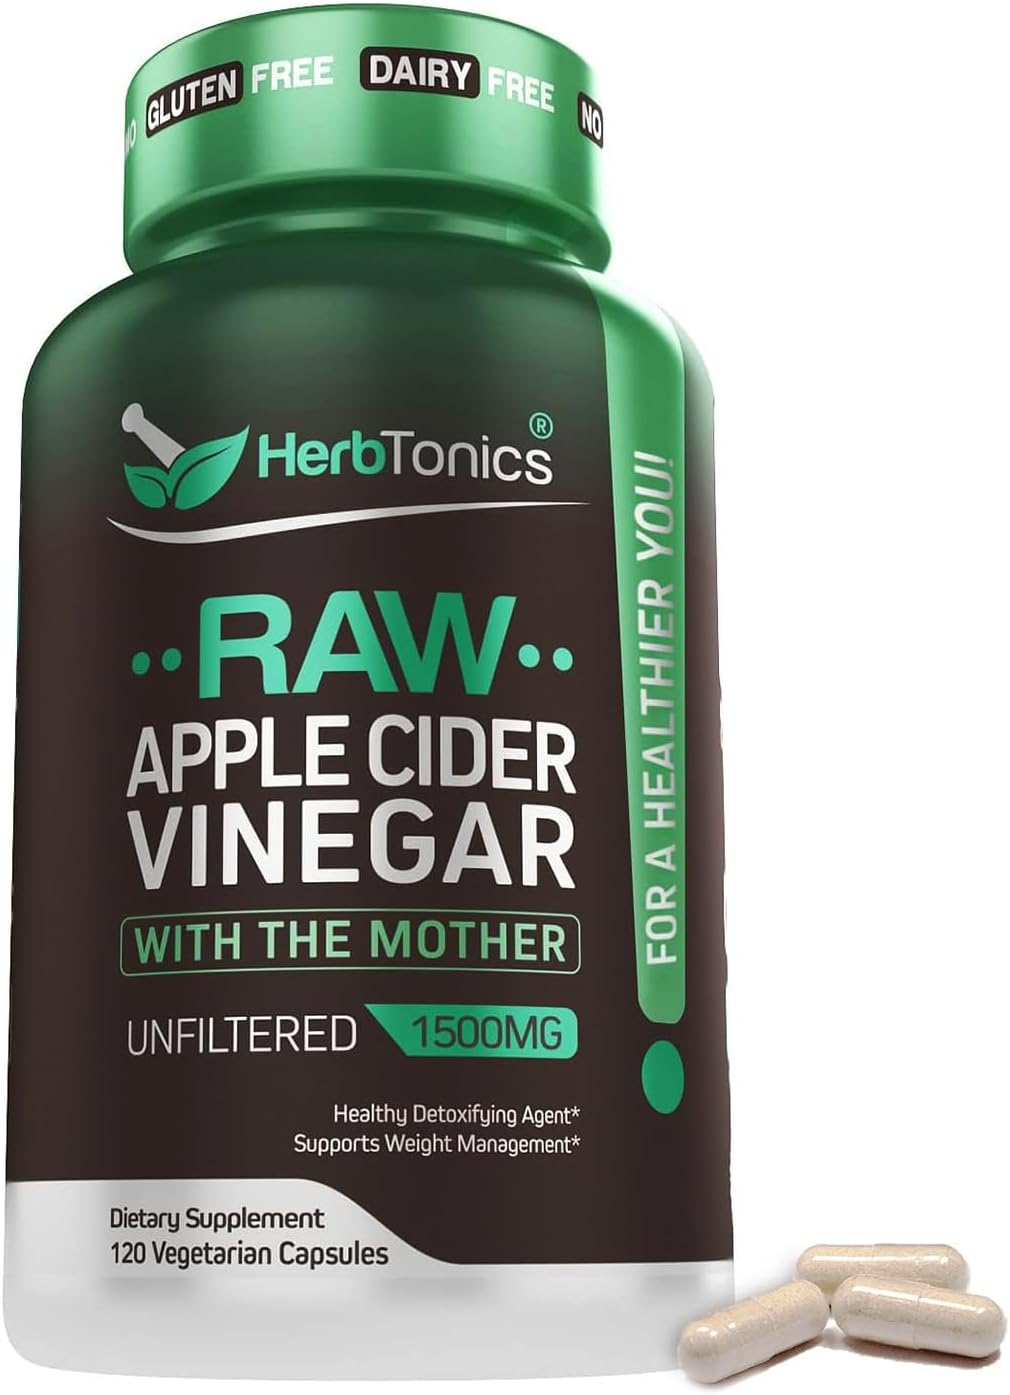 Herbtonics Raw Apple Cider Vinegar Capsules, 1500mg Detox Support (Packaging May Vary), 120 Caps